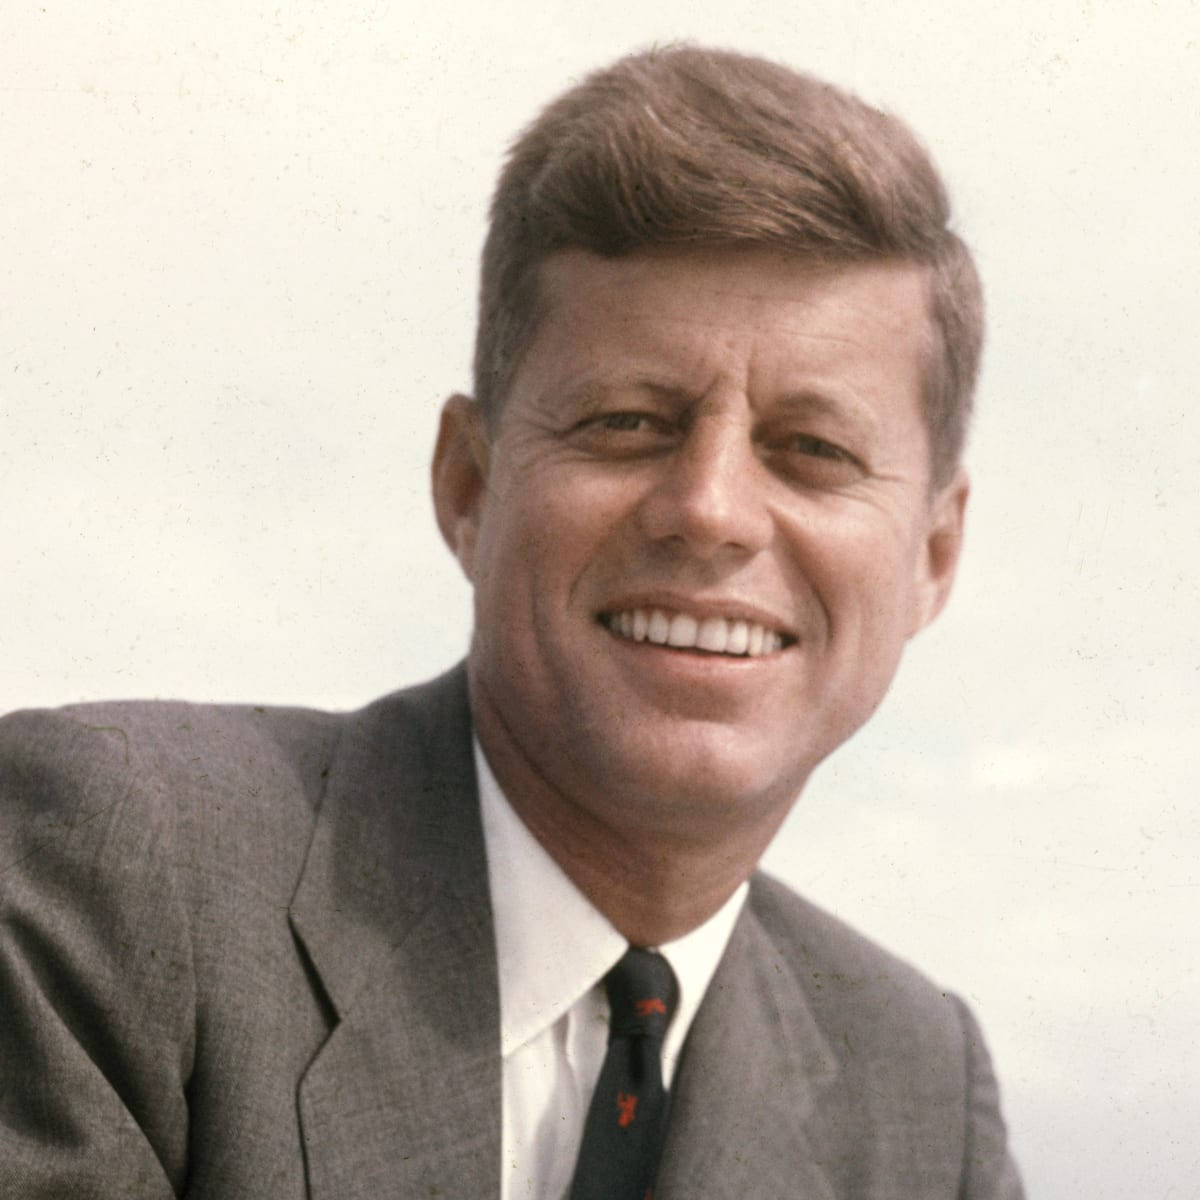 Brown-haired John F. Kennedy Wallpaper